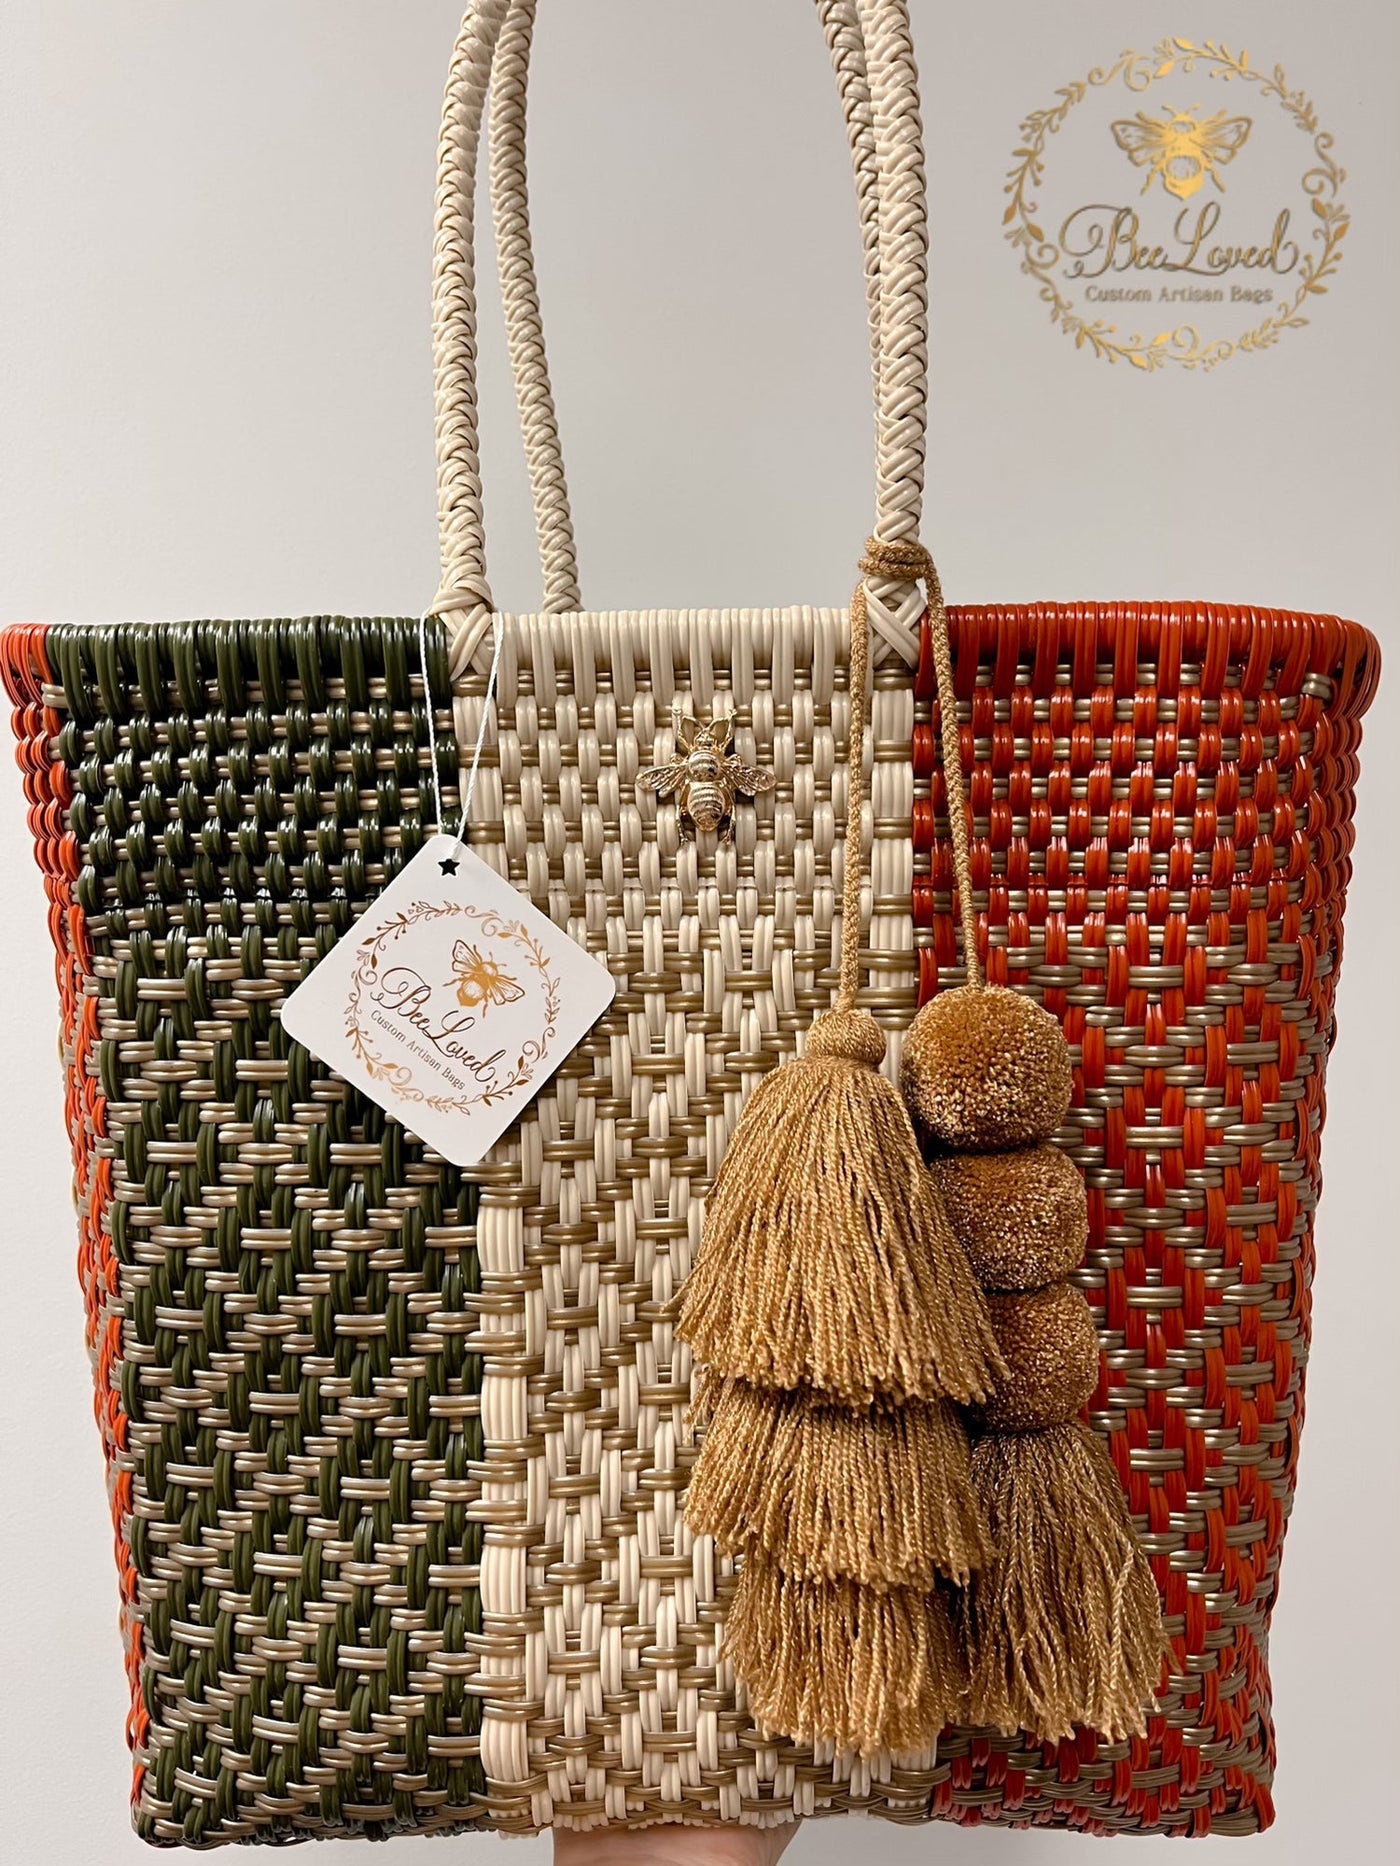 BeeLoved Custom Artisan Bags and Gifts Handbags Medium Fall For You Beech Bag